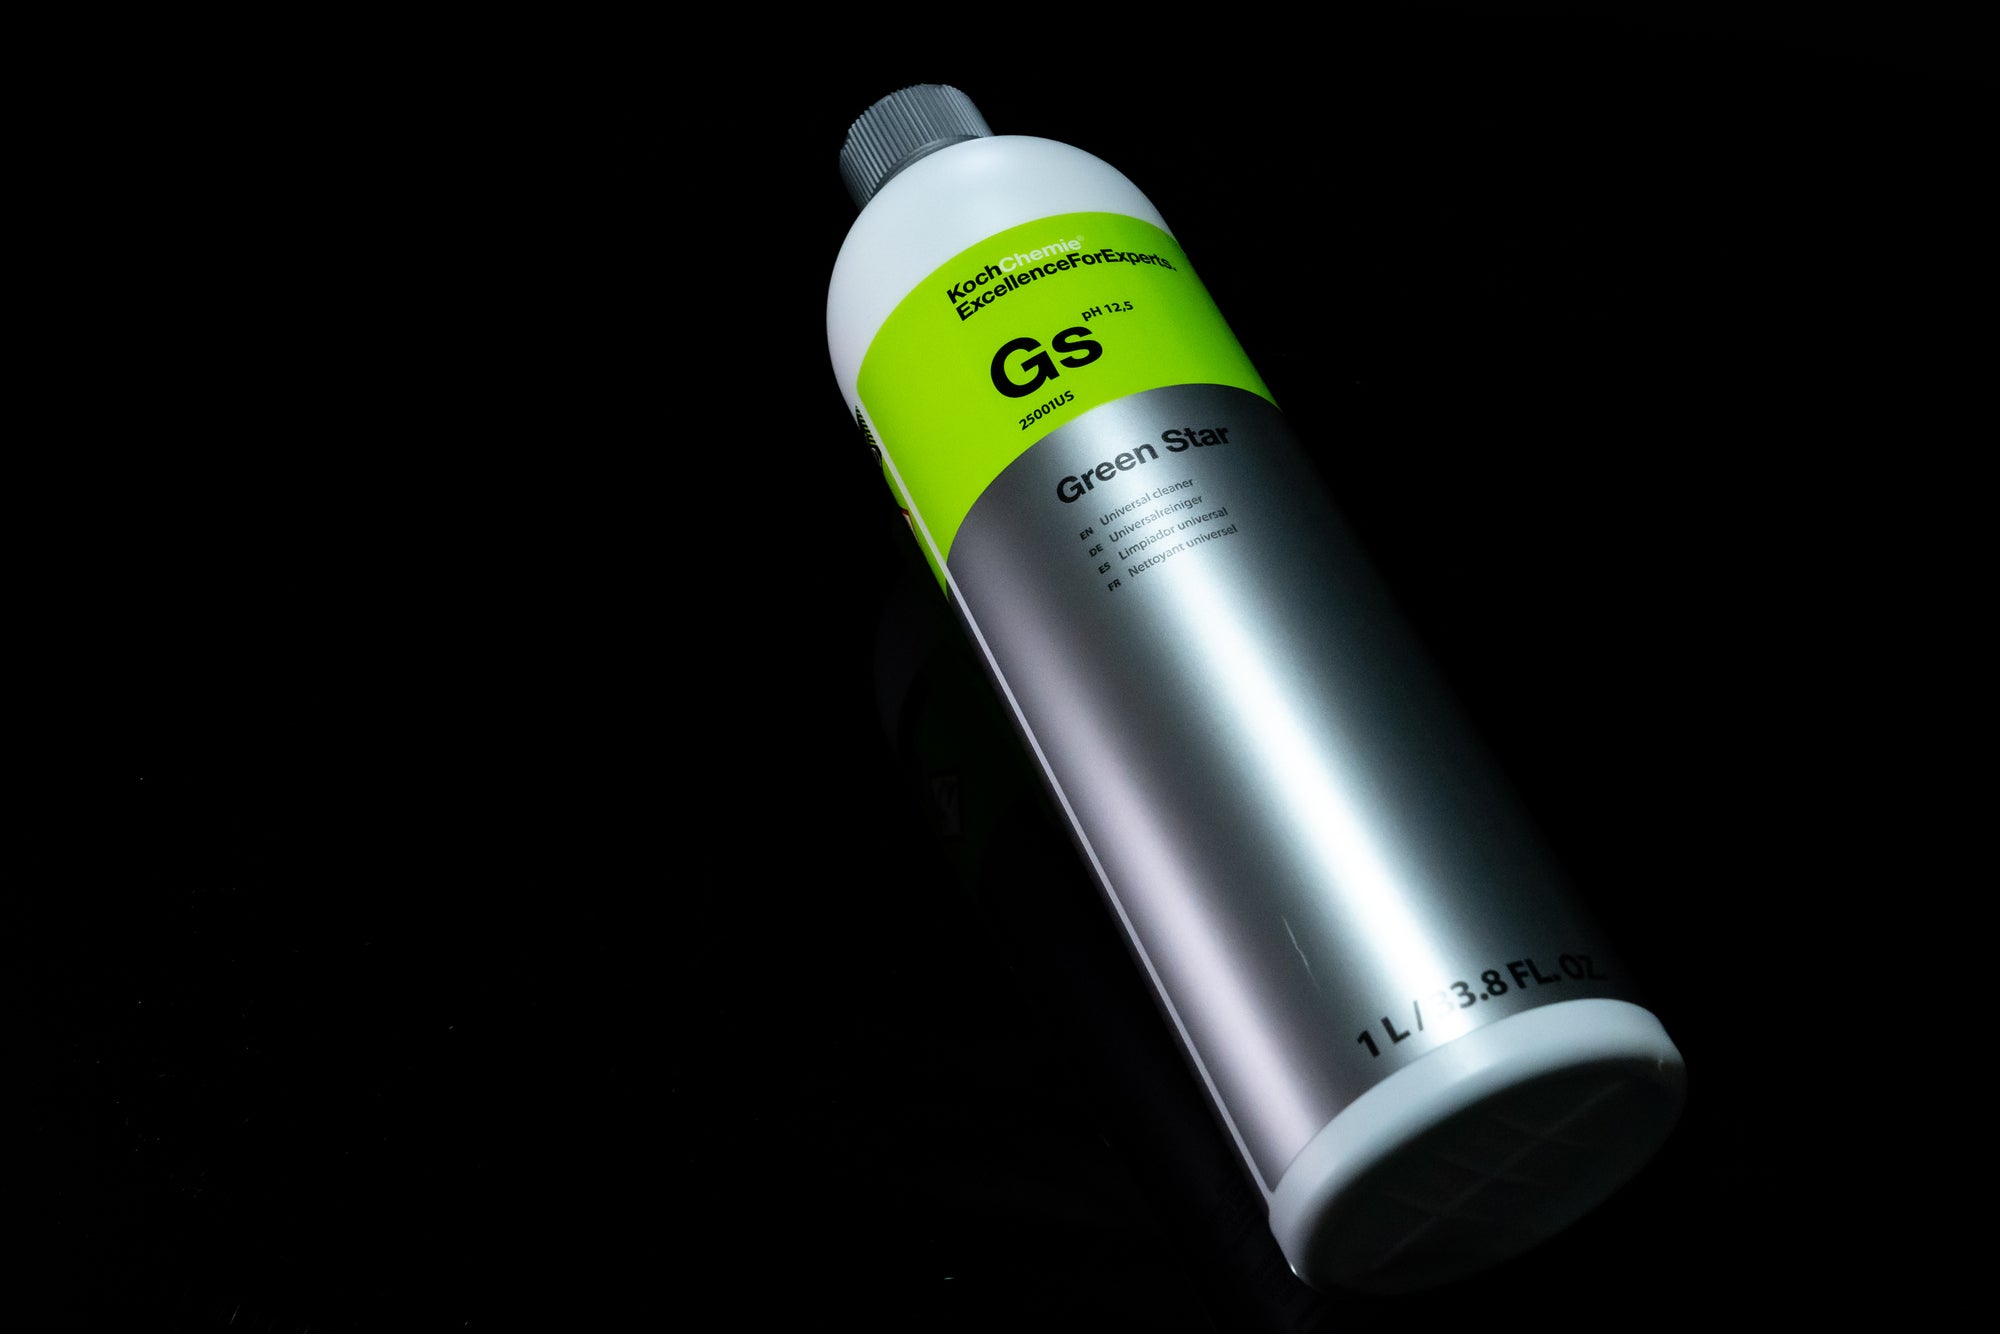 Koch Chemie Green Star | All Purpose Cleaner 1 Liter